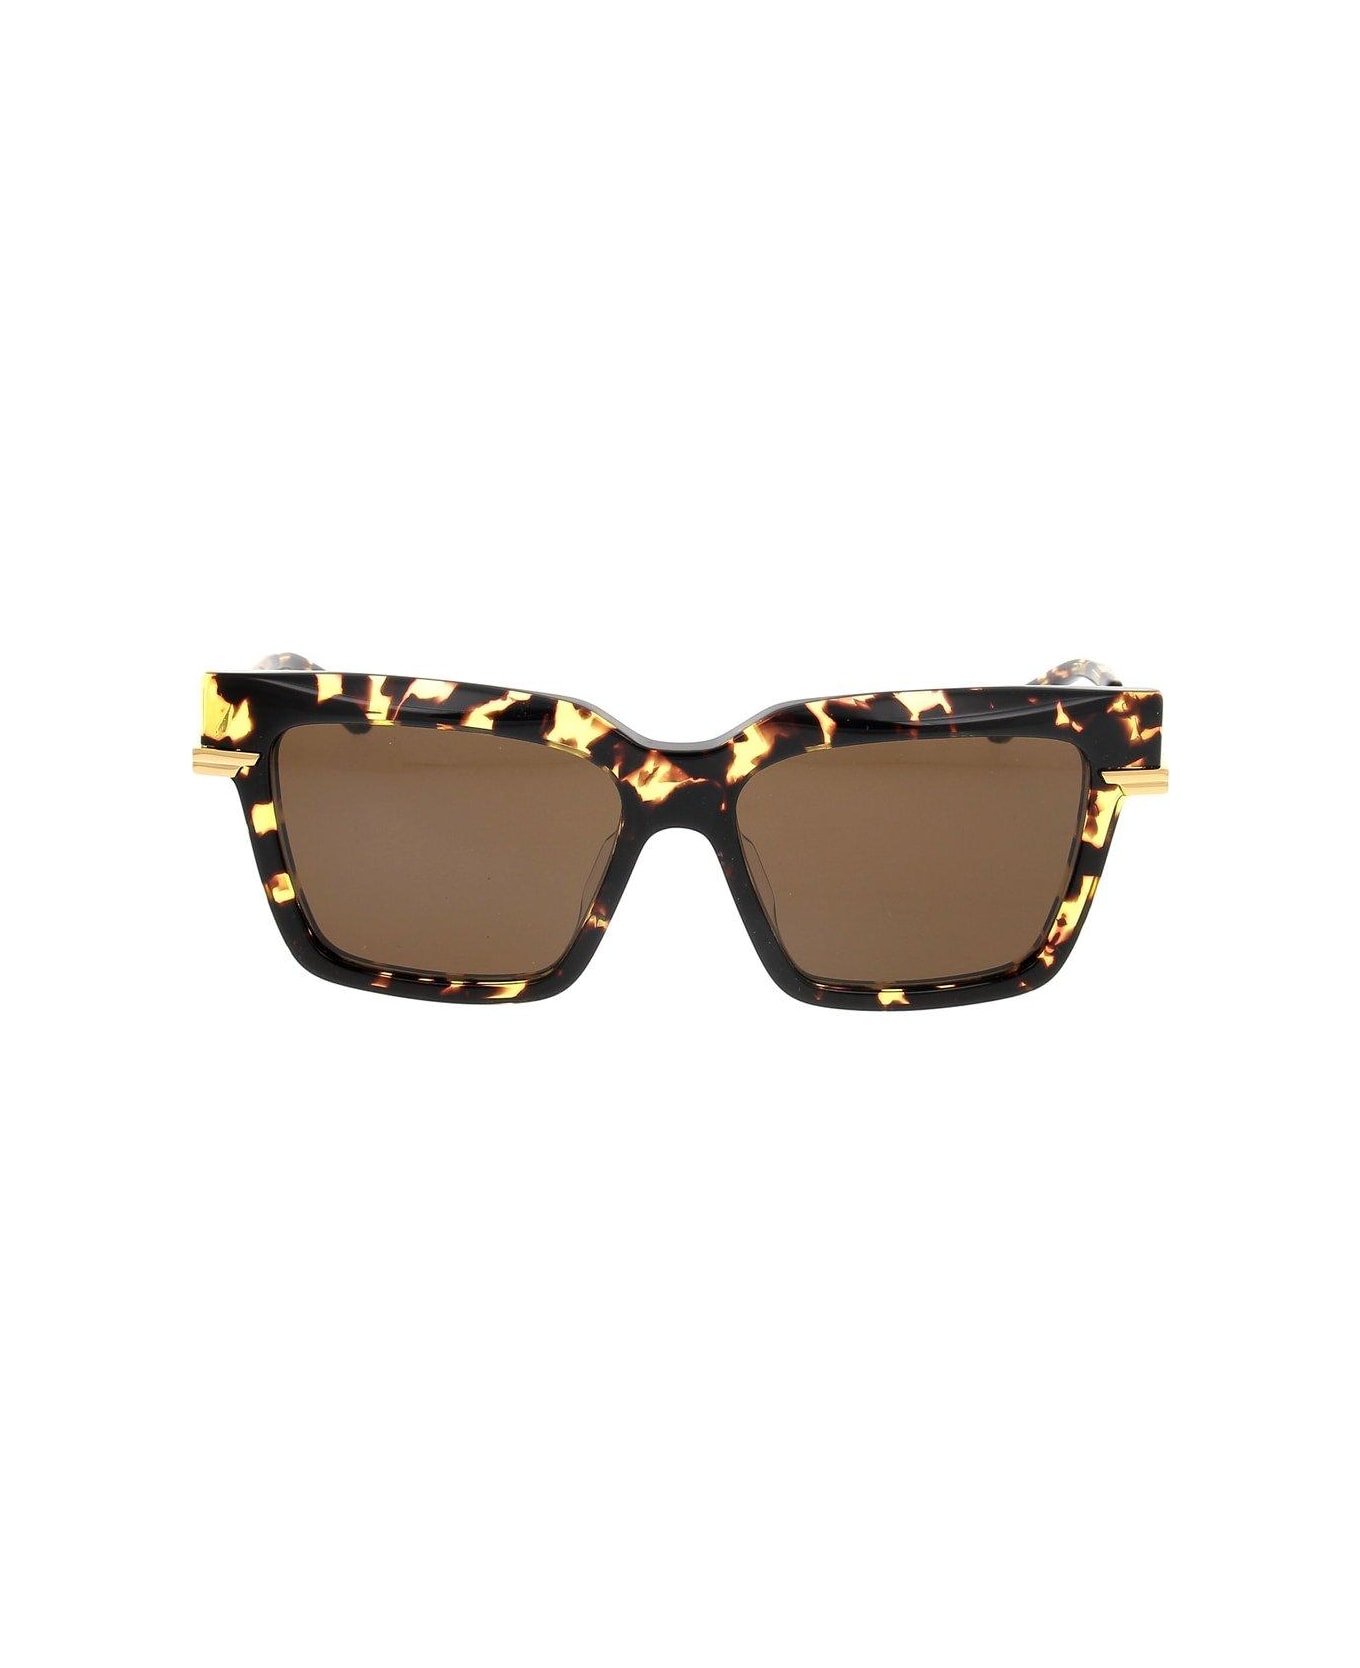 Bottega Veneta Eyewear Cat-eye Frame Sunglasses Sunglasses - 002 HAVANA GOLD BROWN